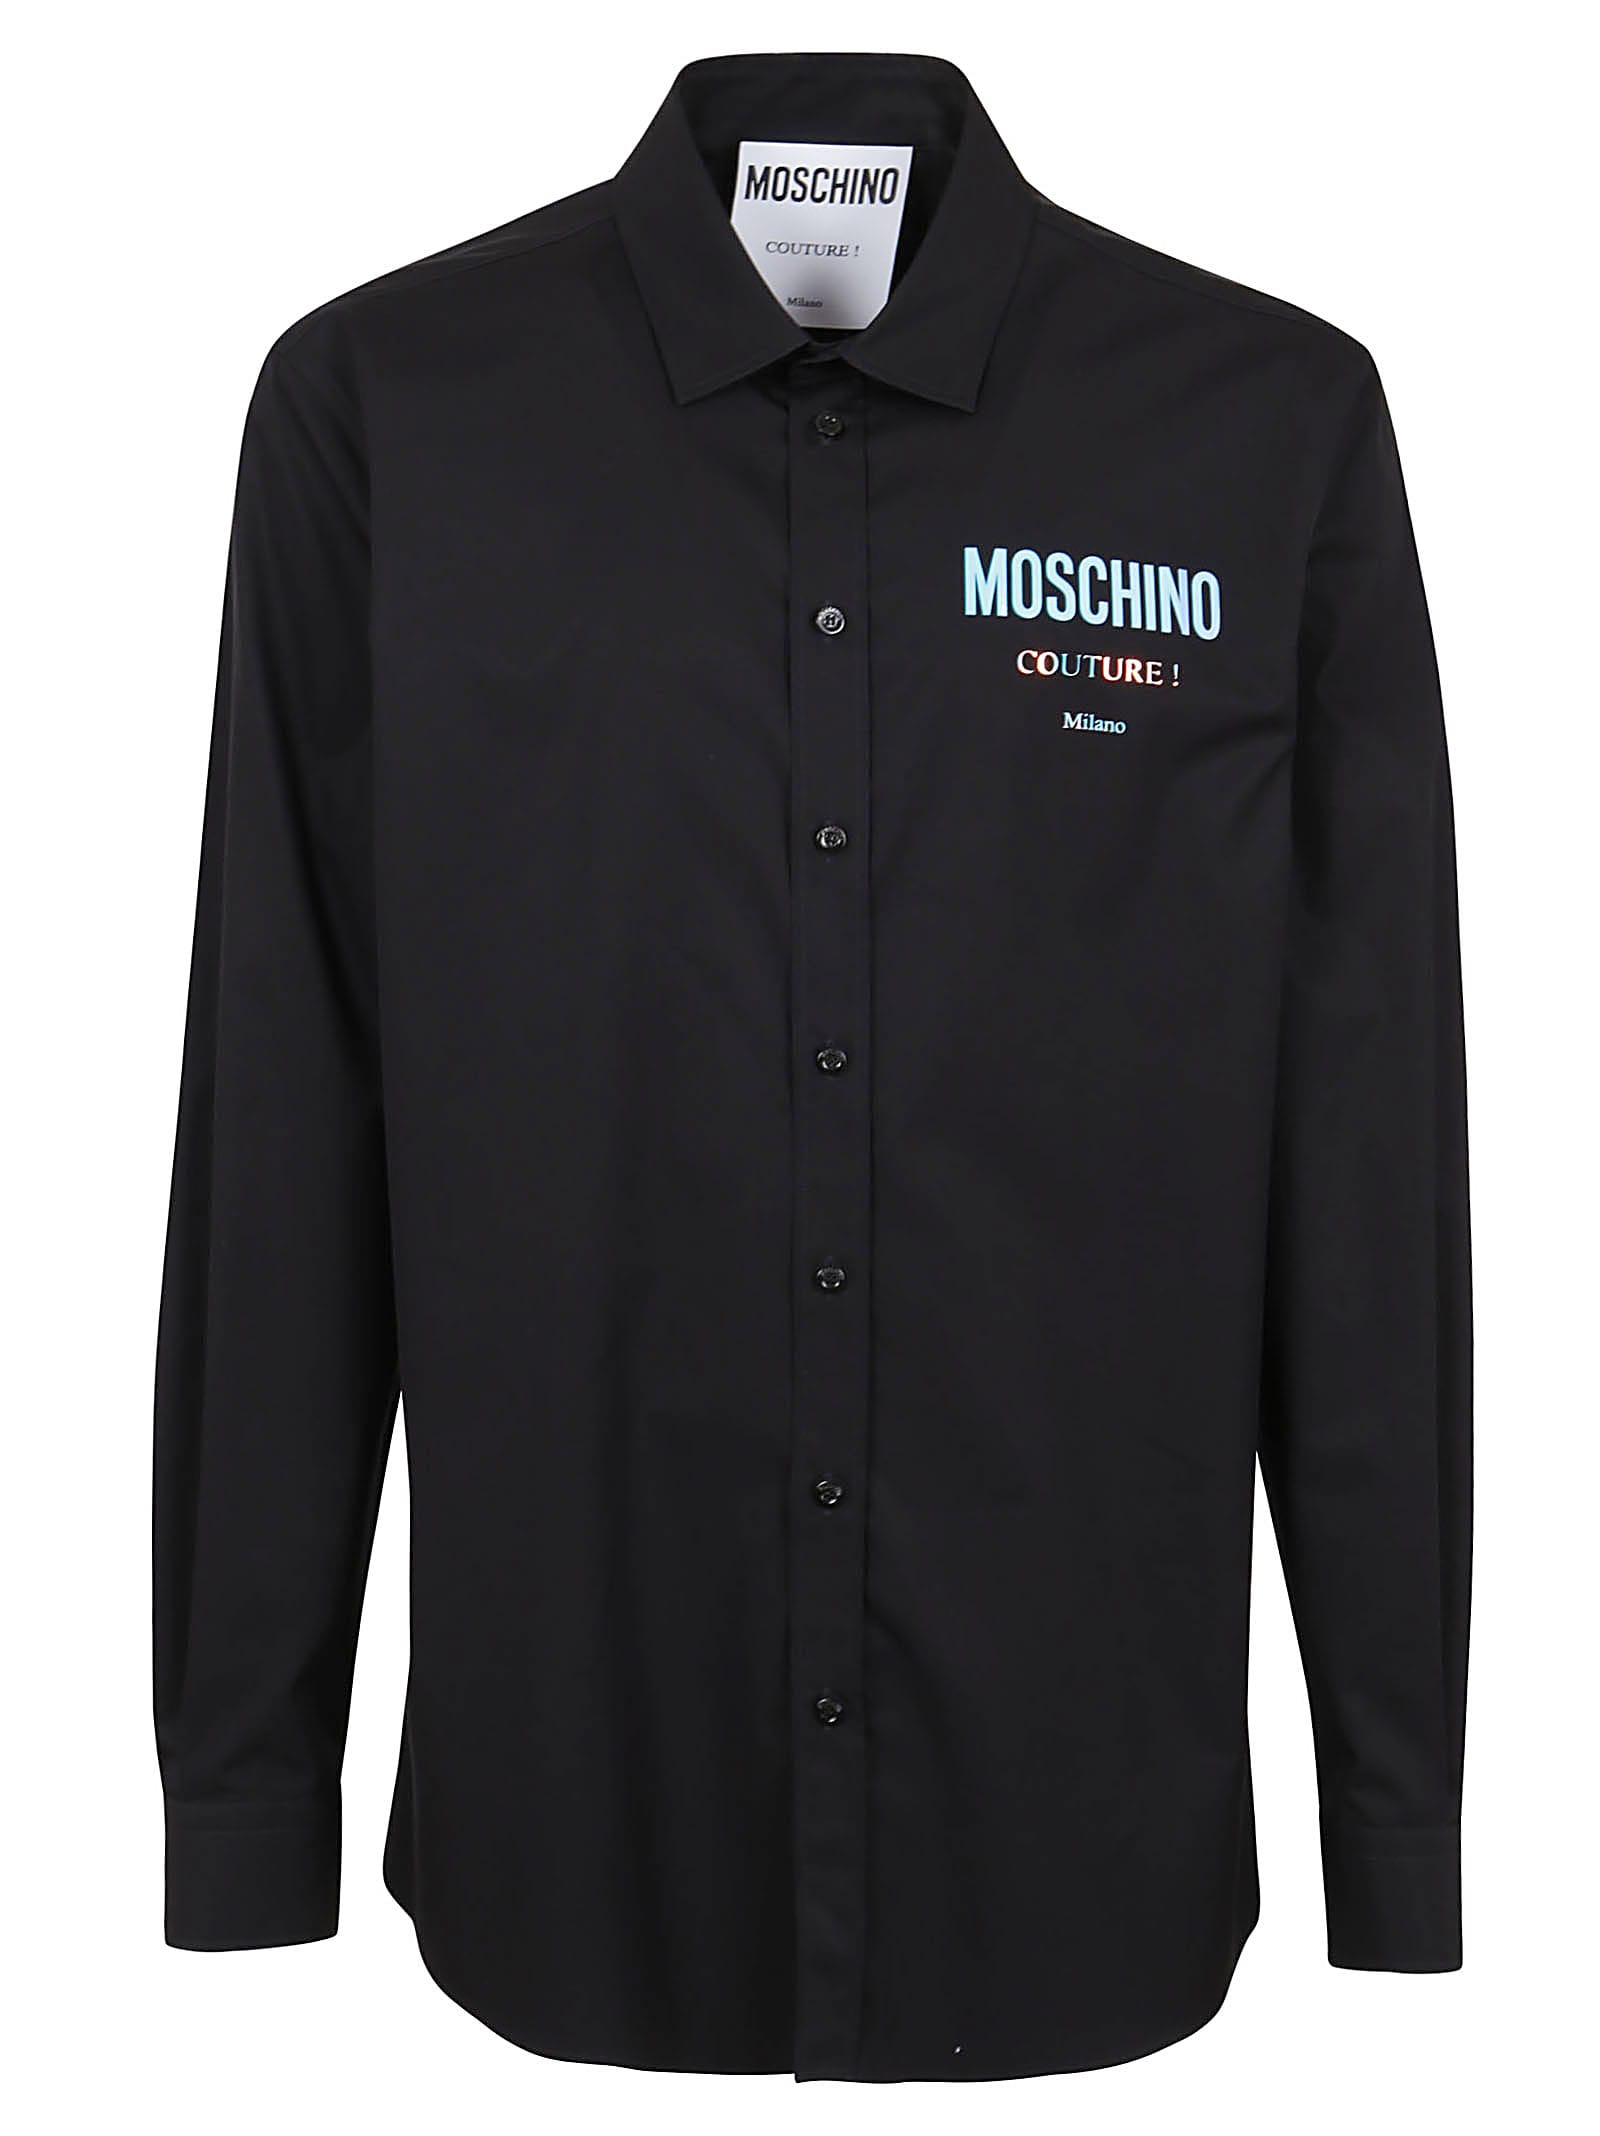 Moschino Couture Milano Hologr Shirt